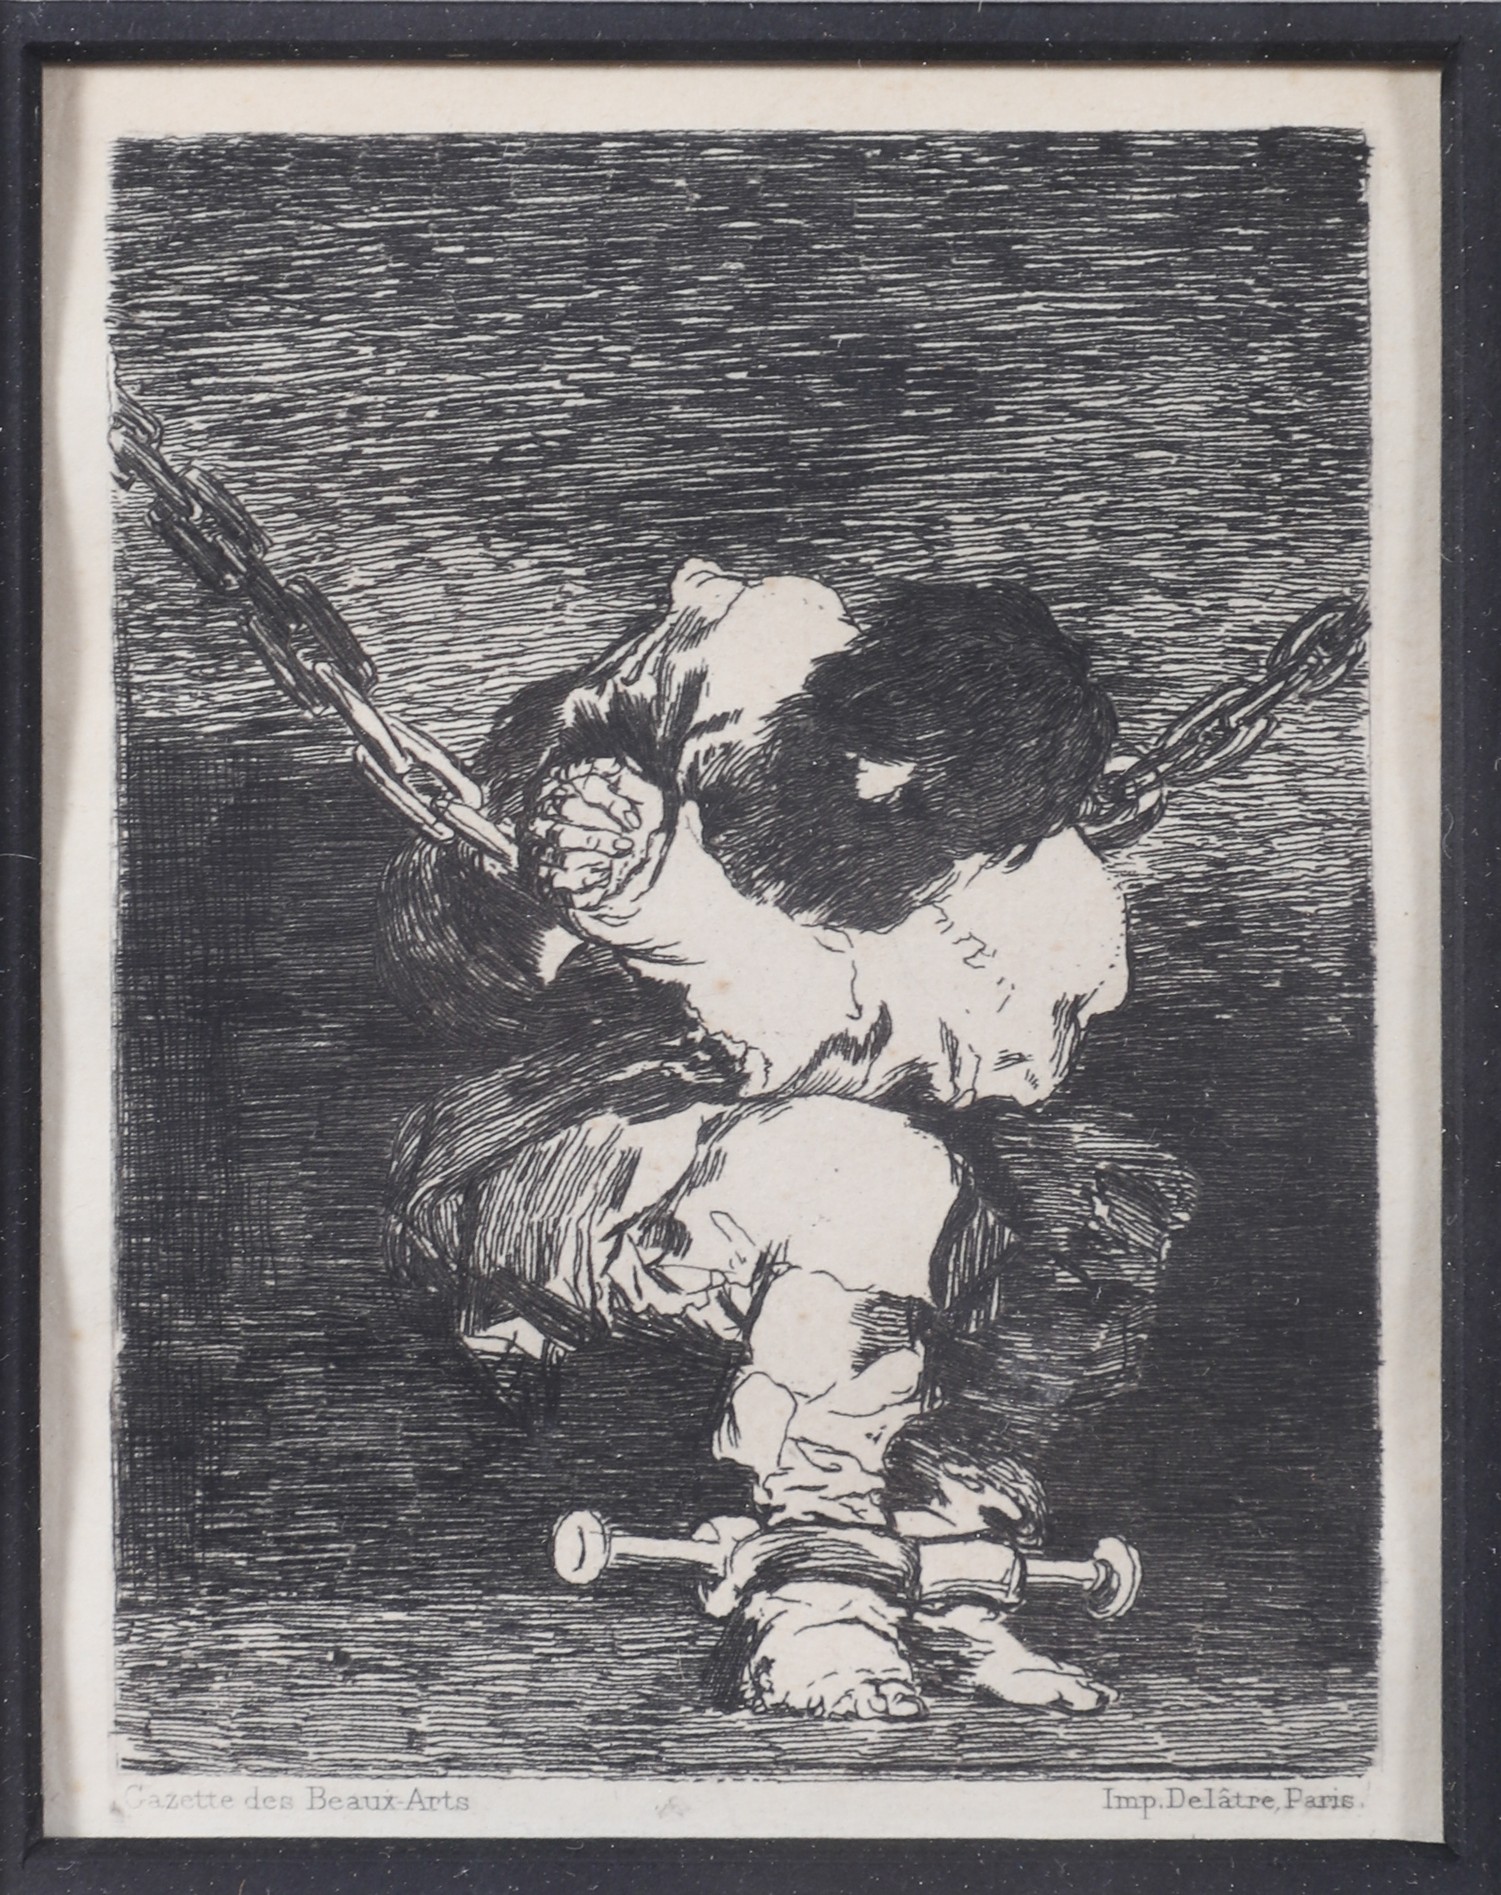 Francisco de Goya, (Spanish, 1746-1828),